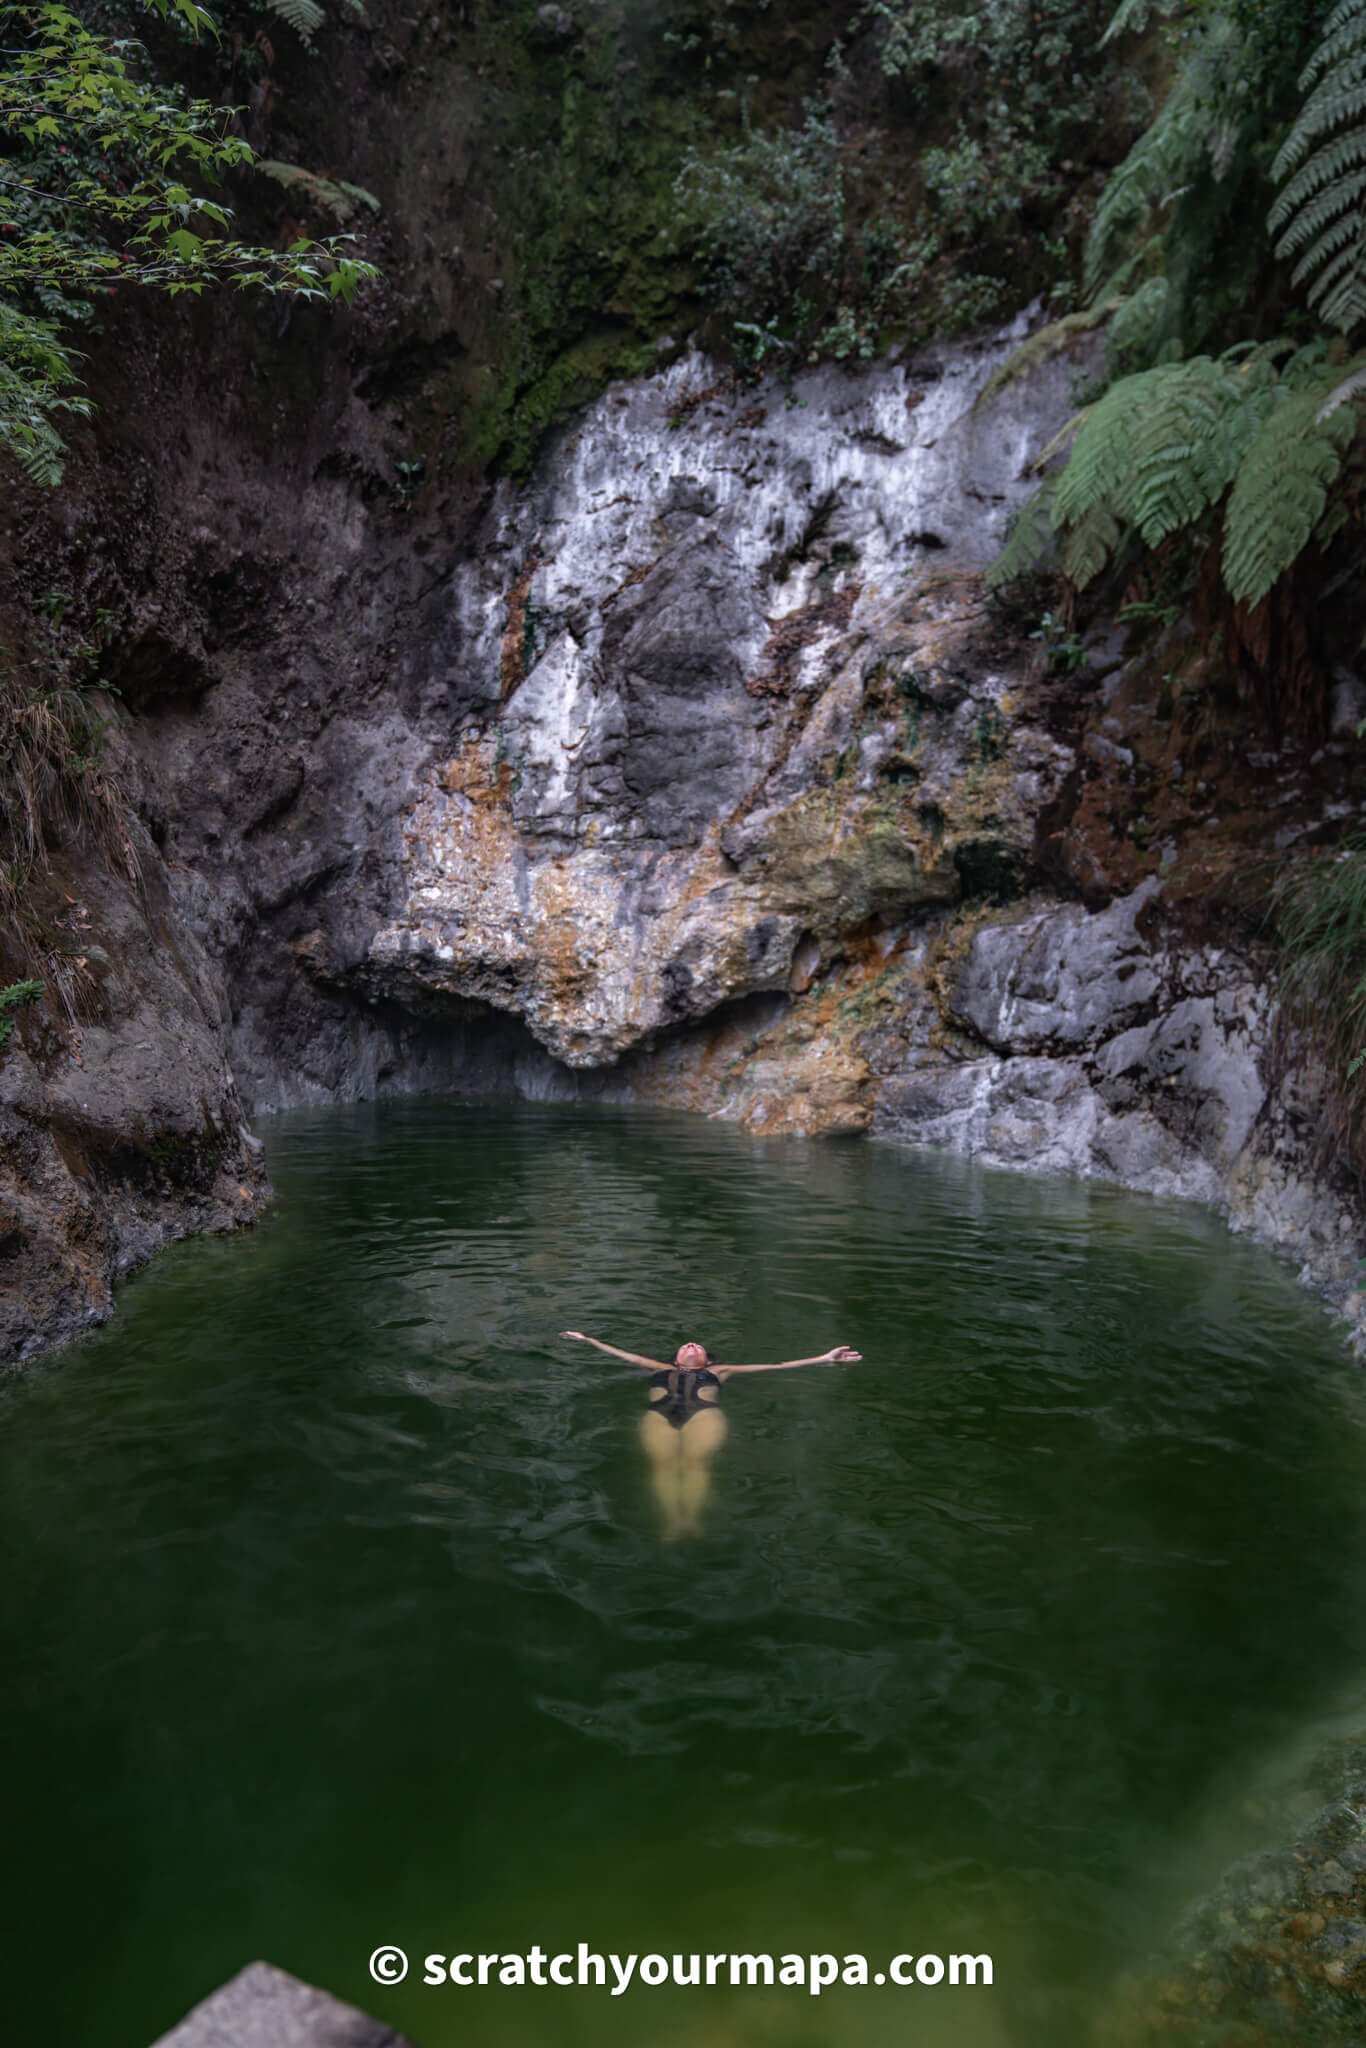 fuentes Georginas hot springs in Guatemala